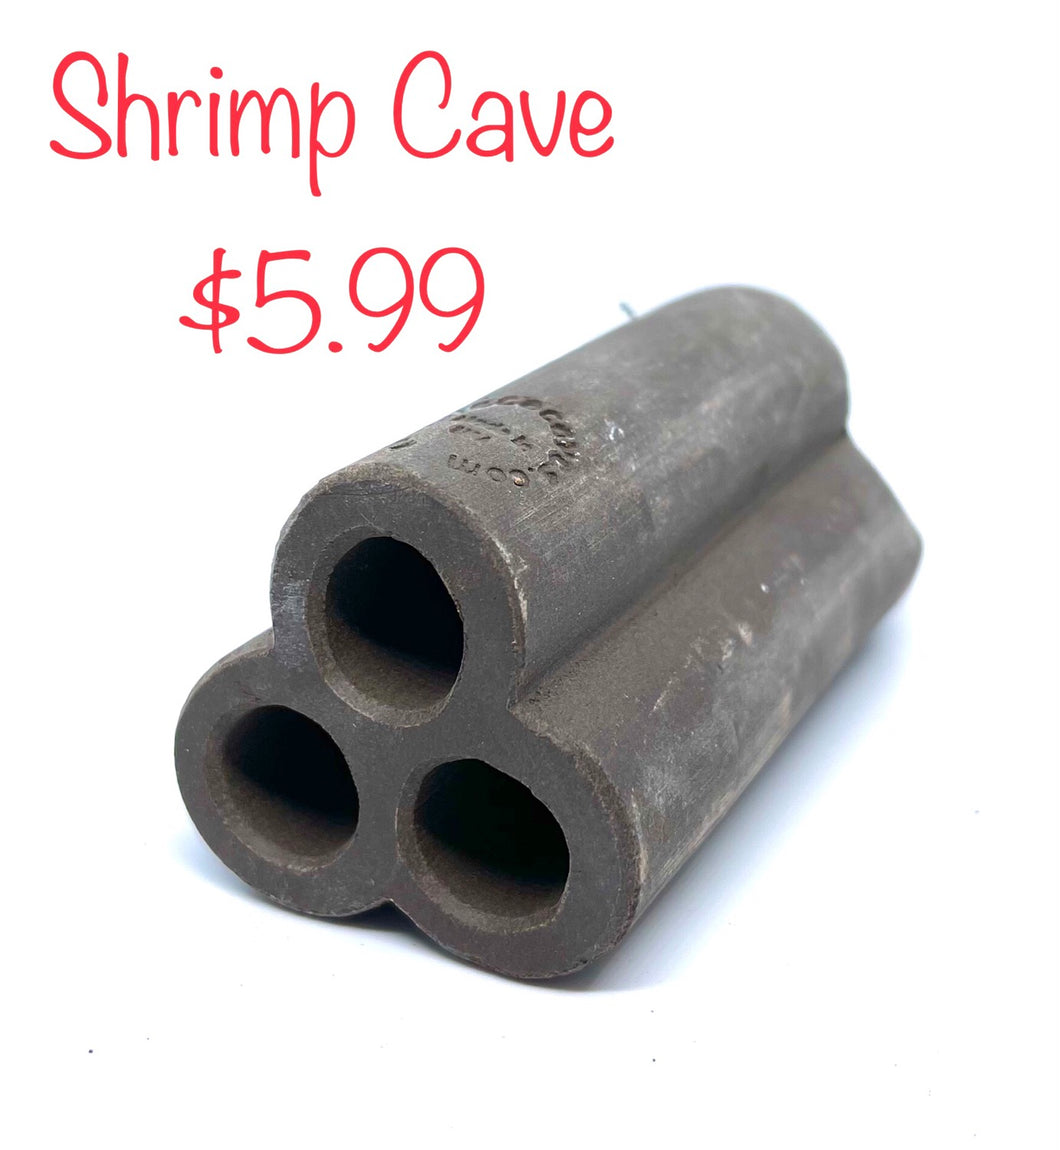 Shrimp Cave